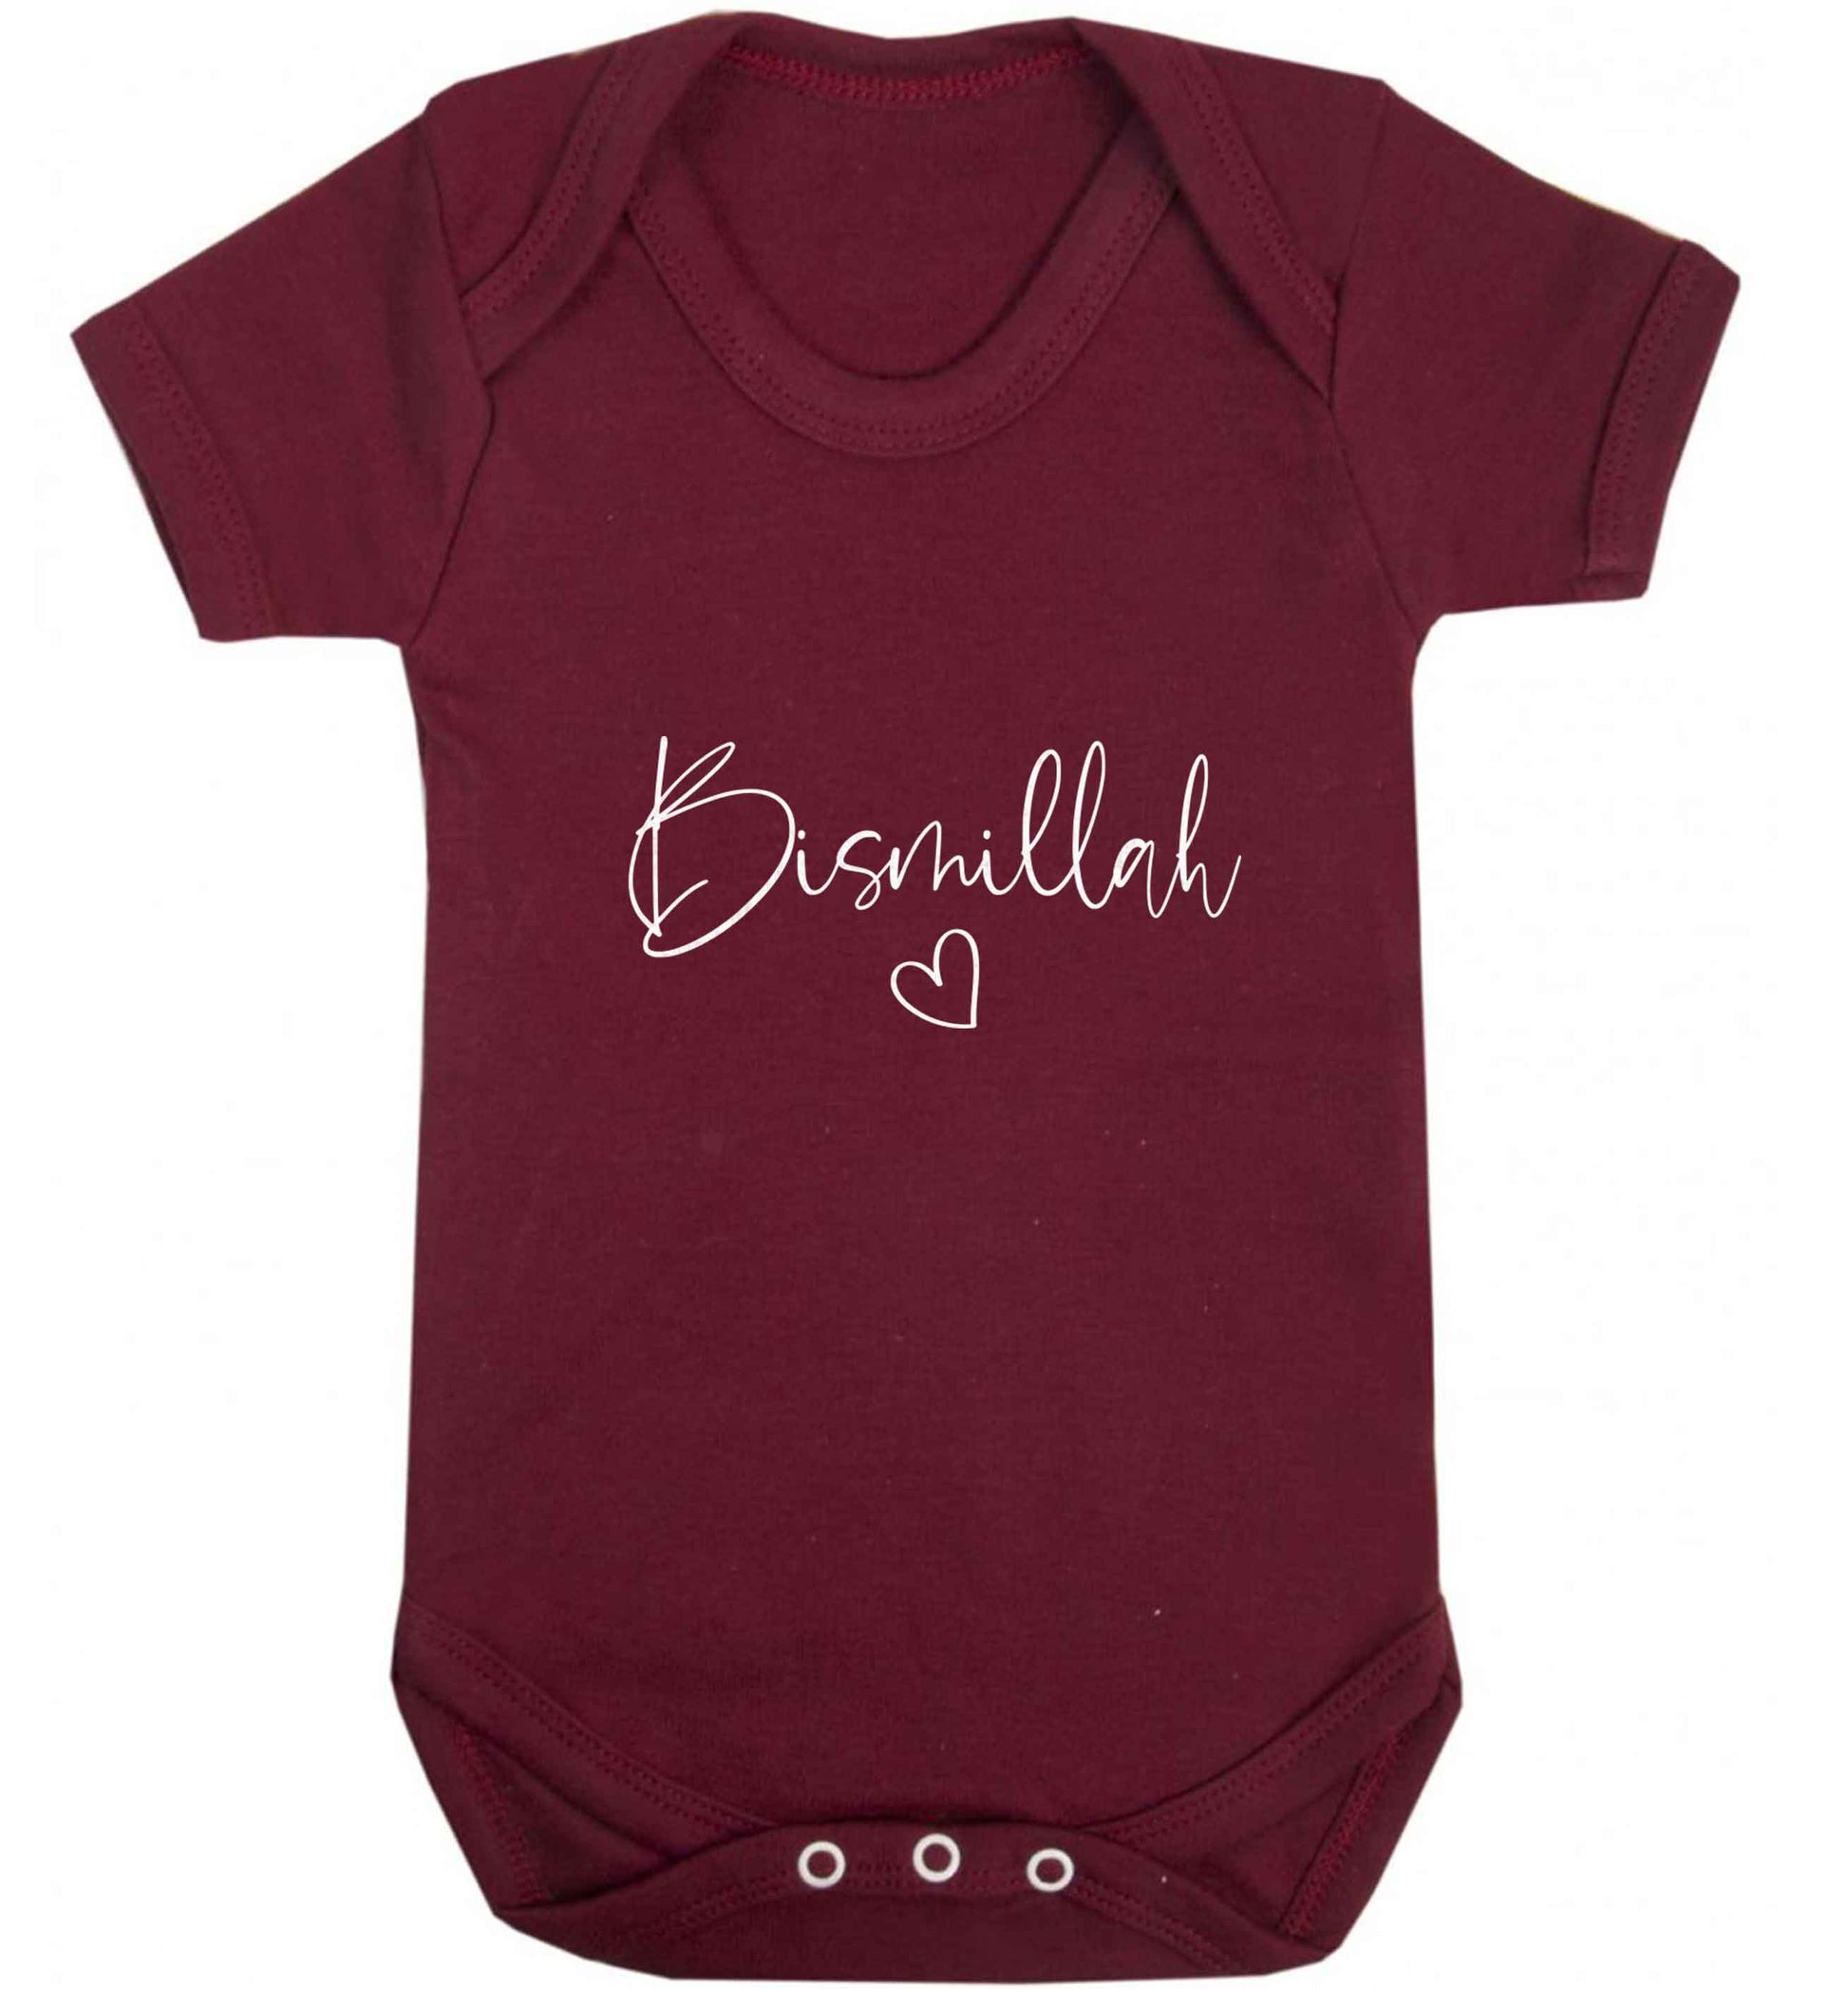 Bismillah baby vest maroon 18-24 months